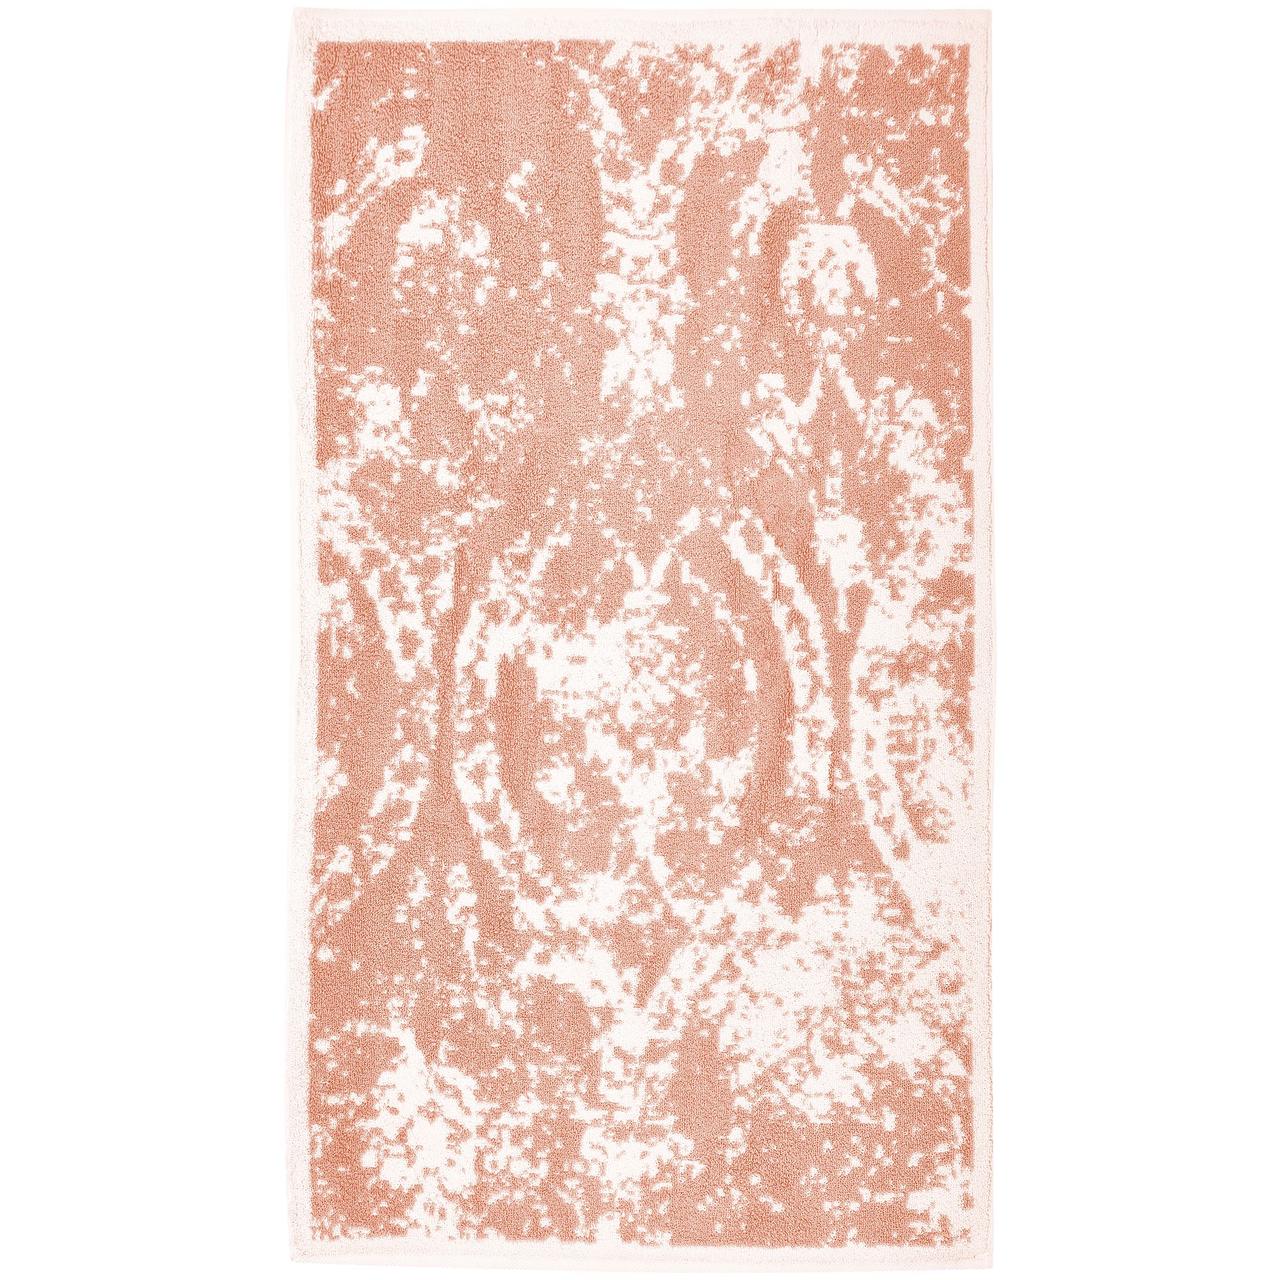 Полотенце махровое Vintage Medium, розовое (артикул 15709.15)